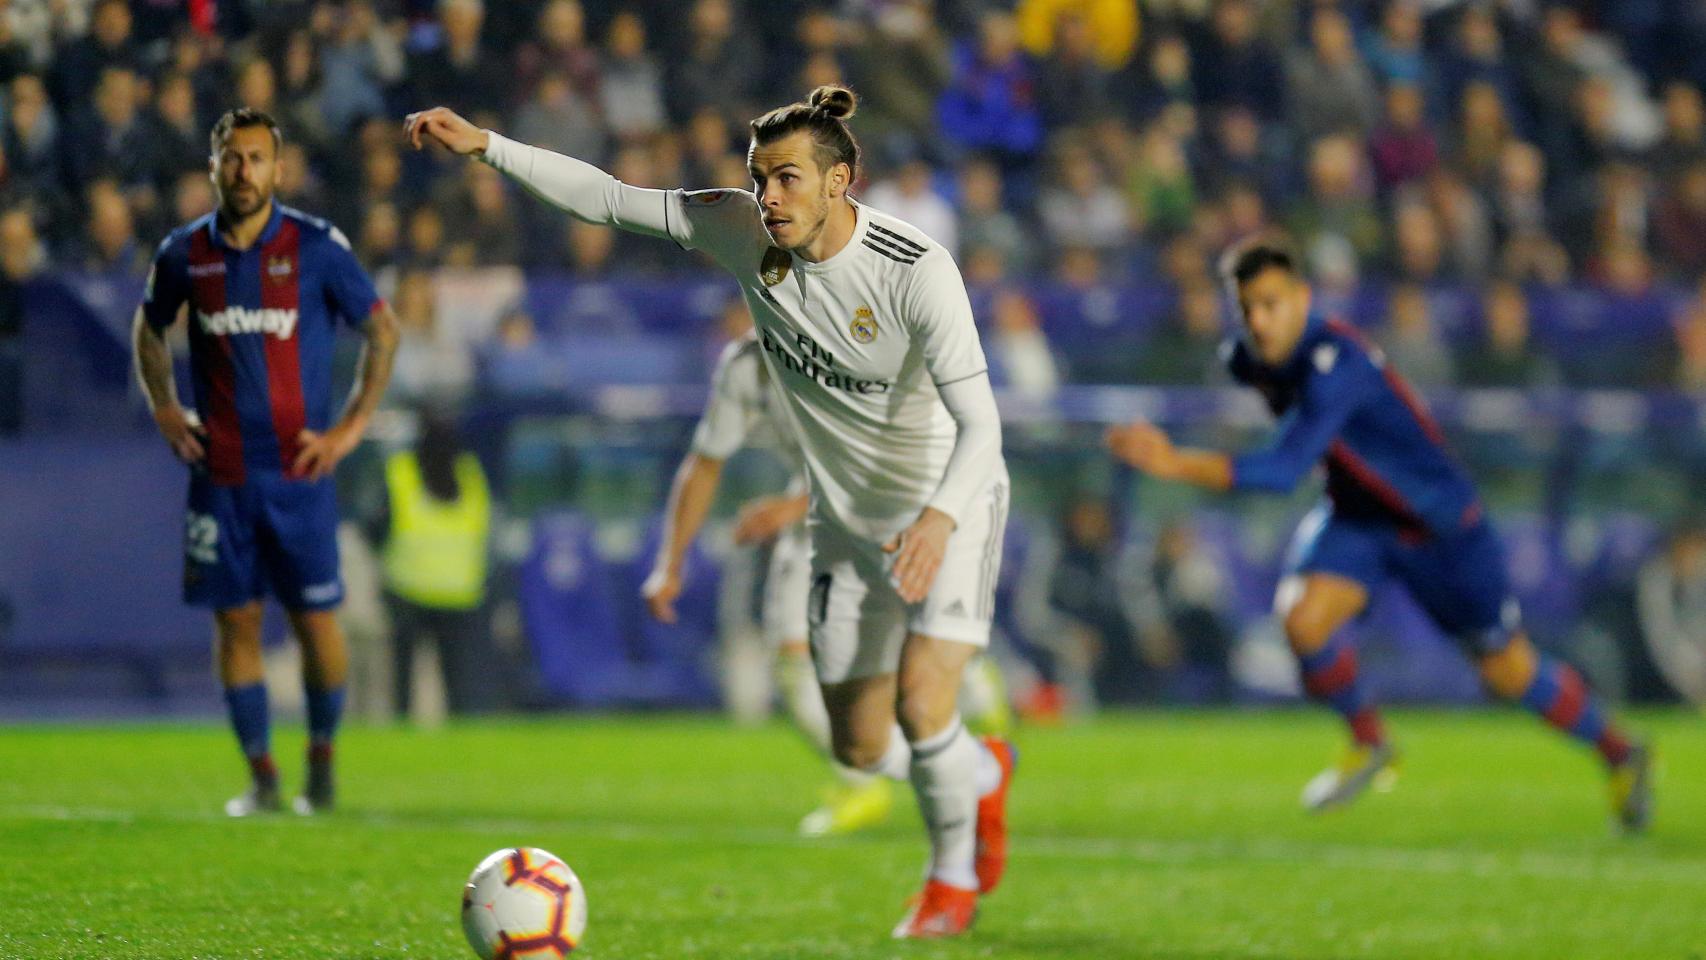 Bale marca de penalti al Levante